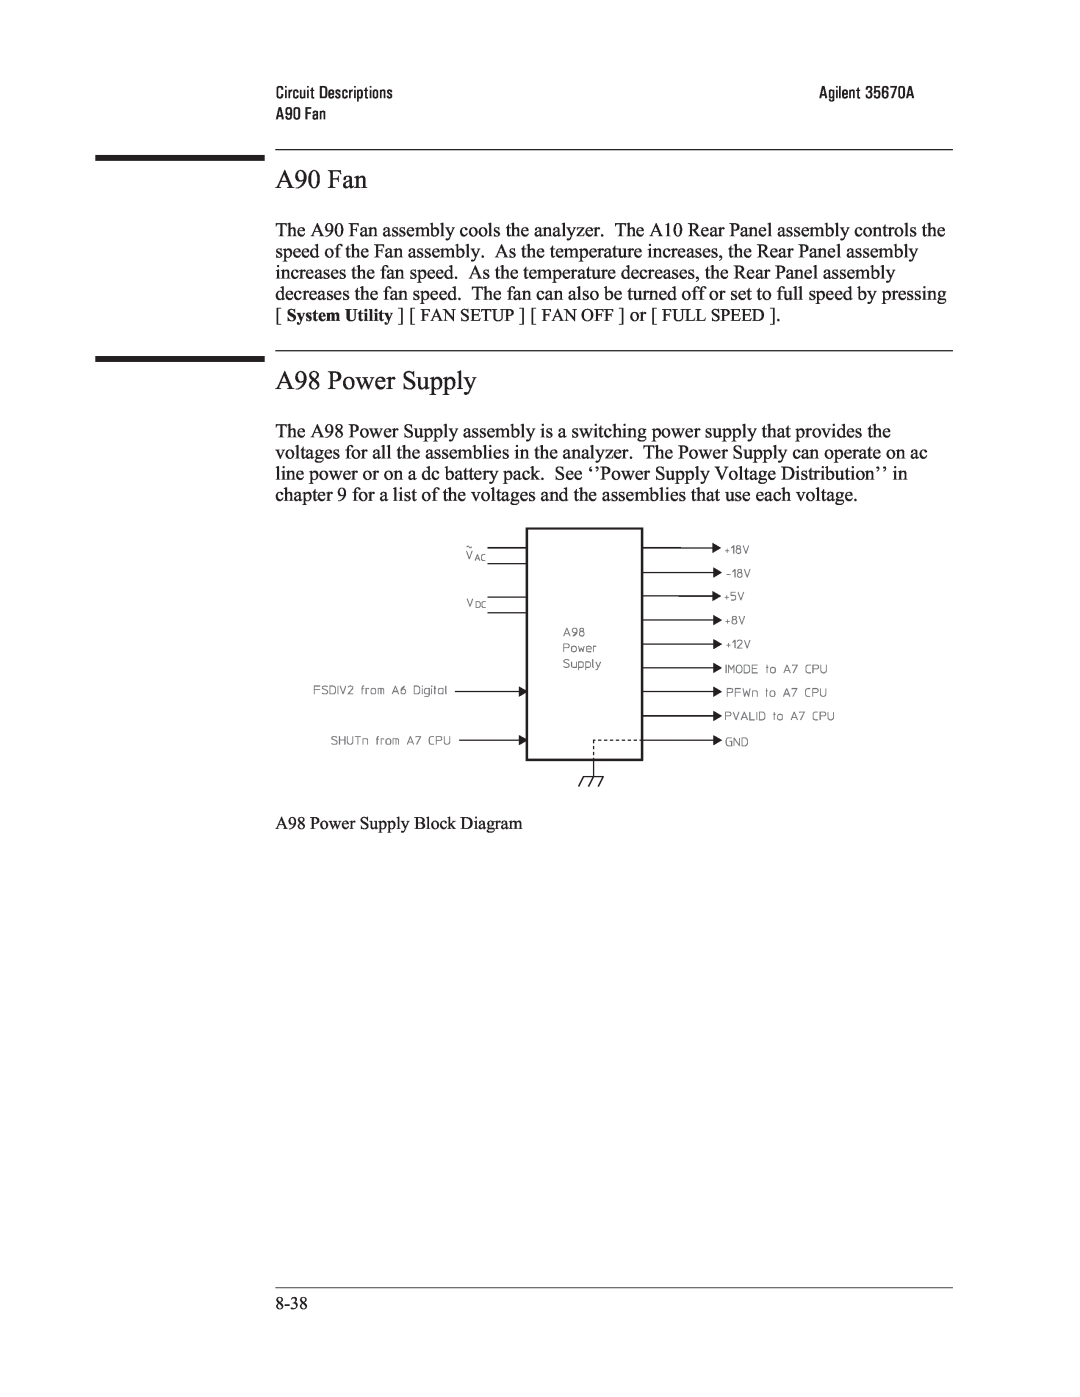 Agilent Technologies 35670-90066 manual A90 Fan, A98 Power Supply 